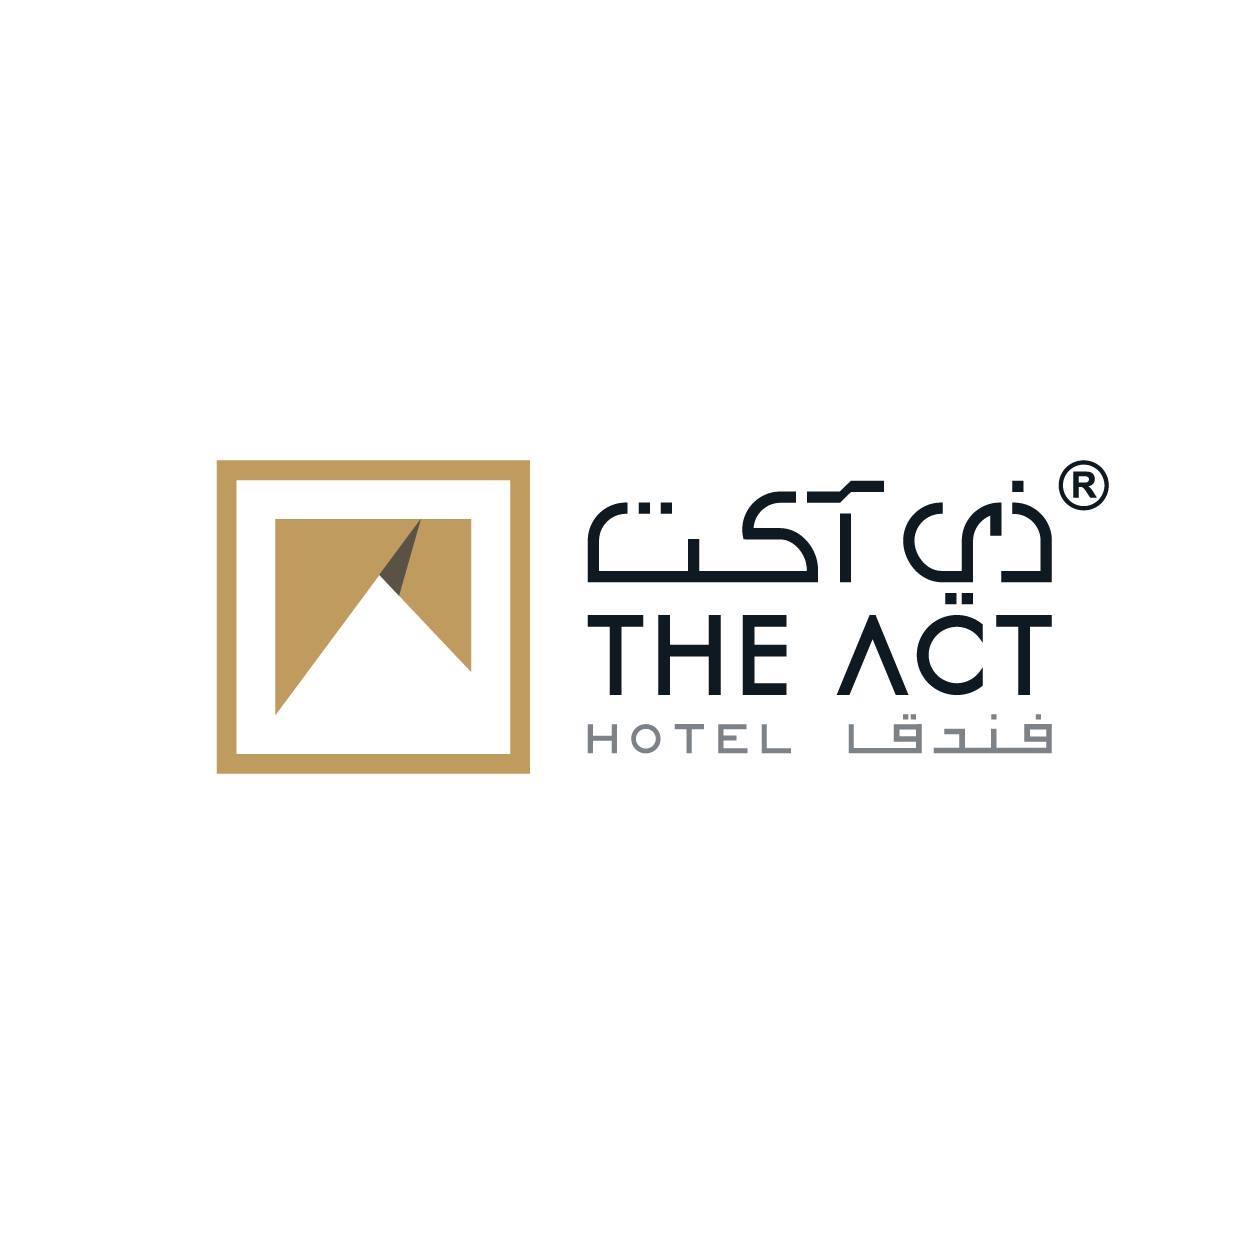 The Act Hotel Logo 